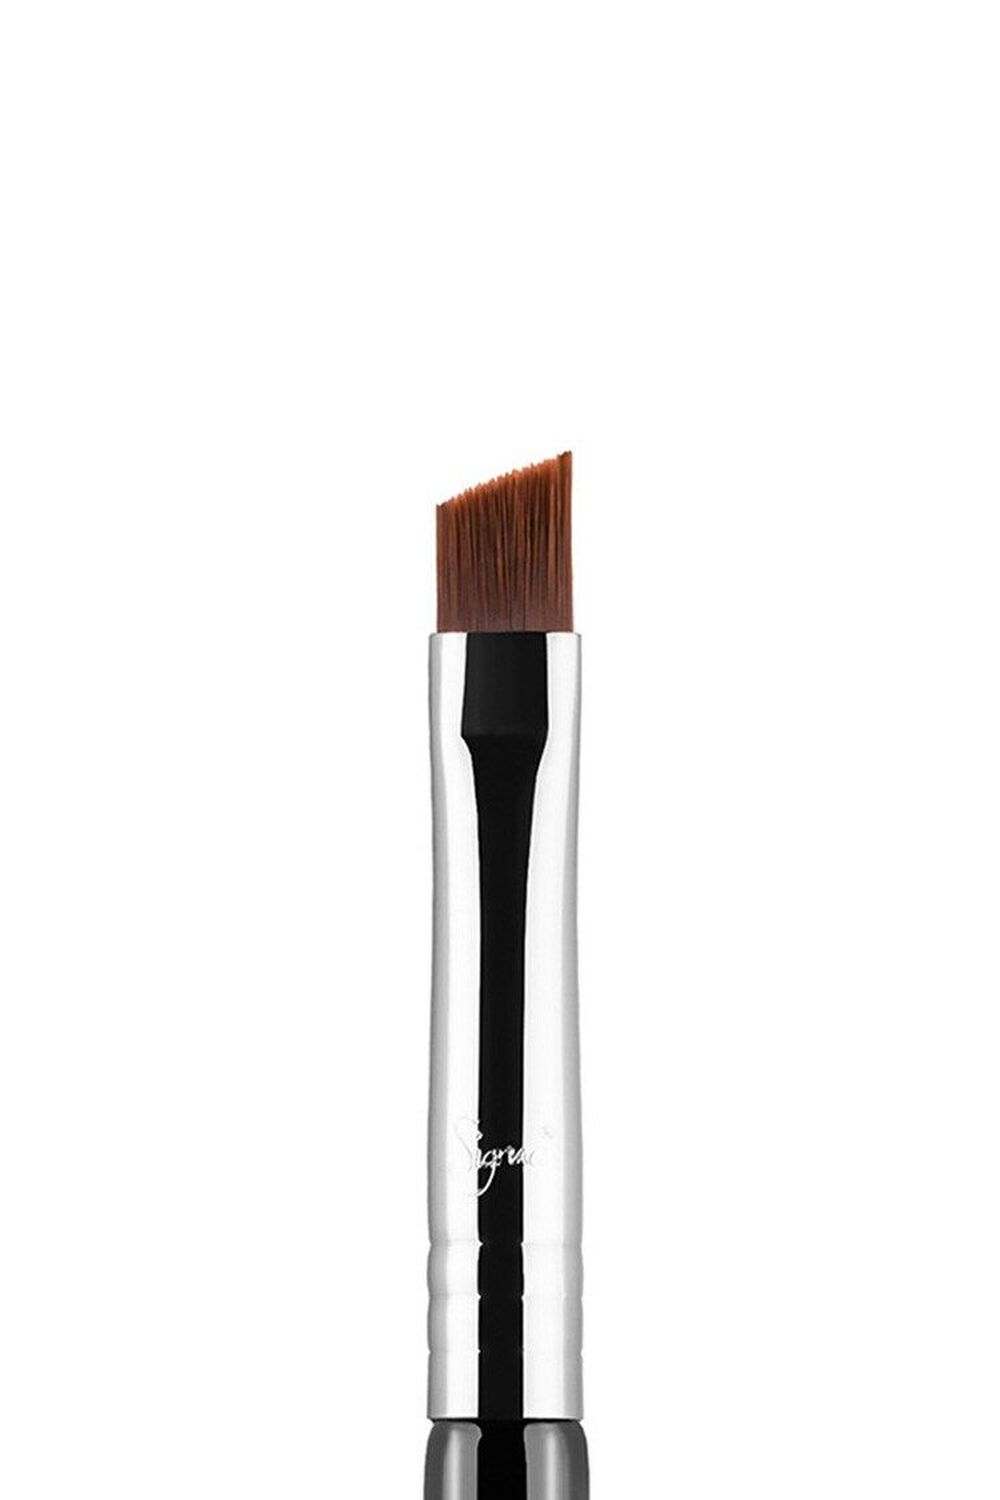 Sigma Beauty E65 – Small Angle Brush, image 2